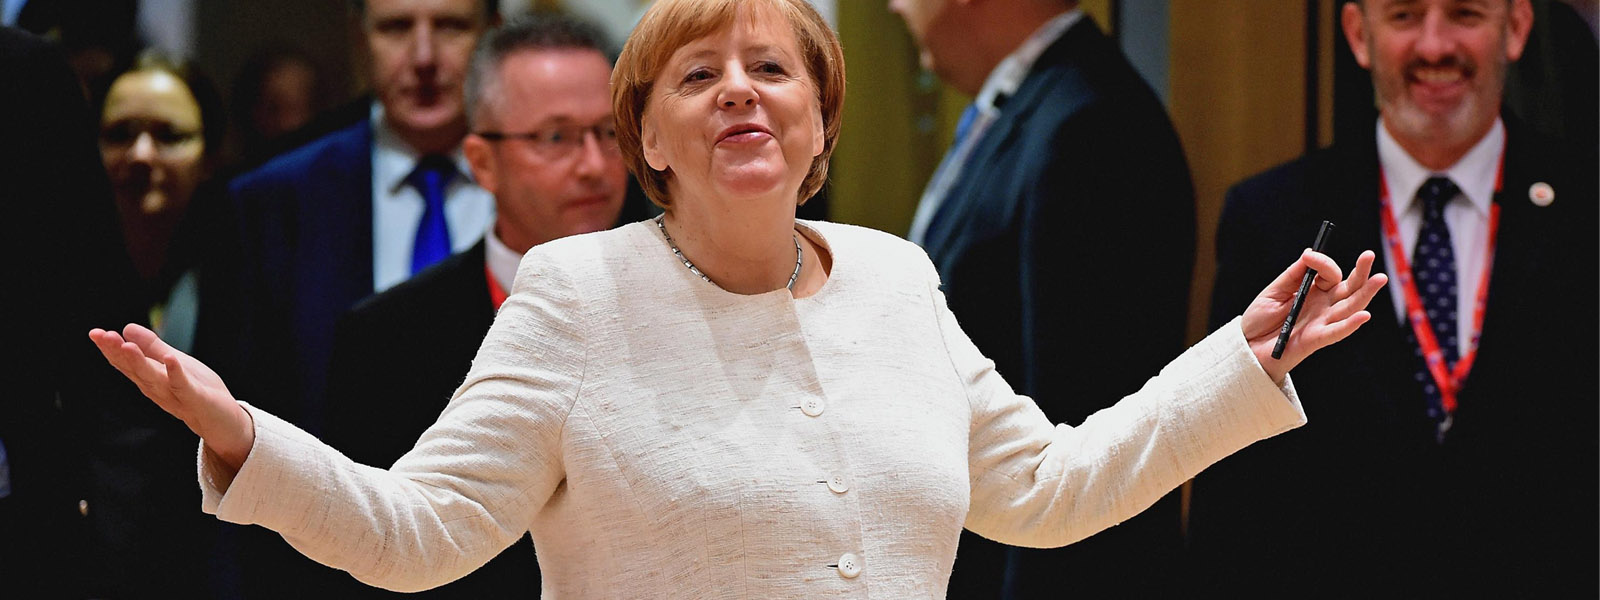 Brexit deal still achievable, Merkel says